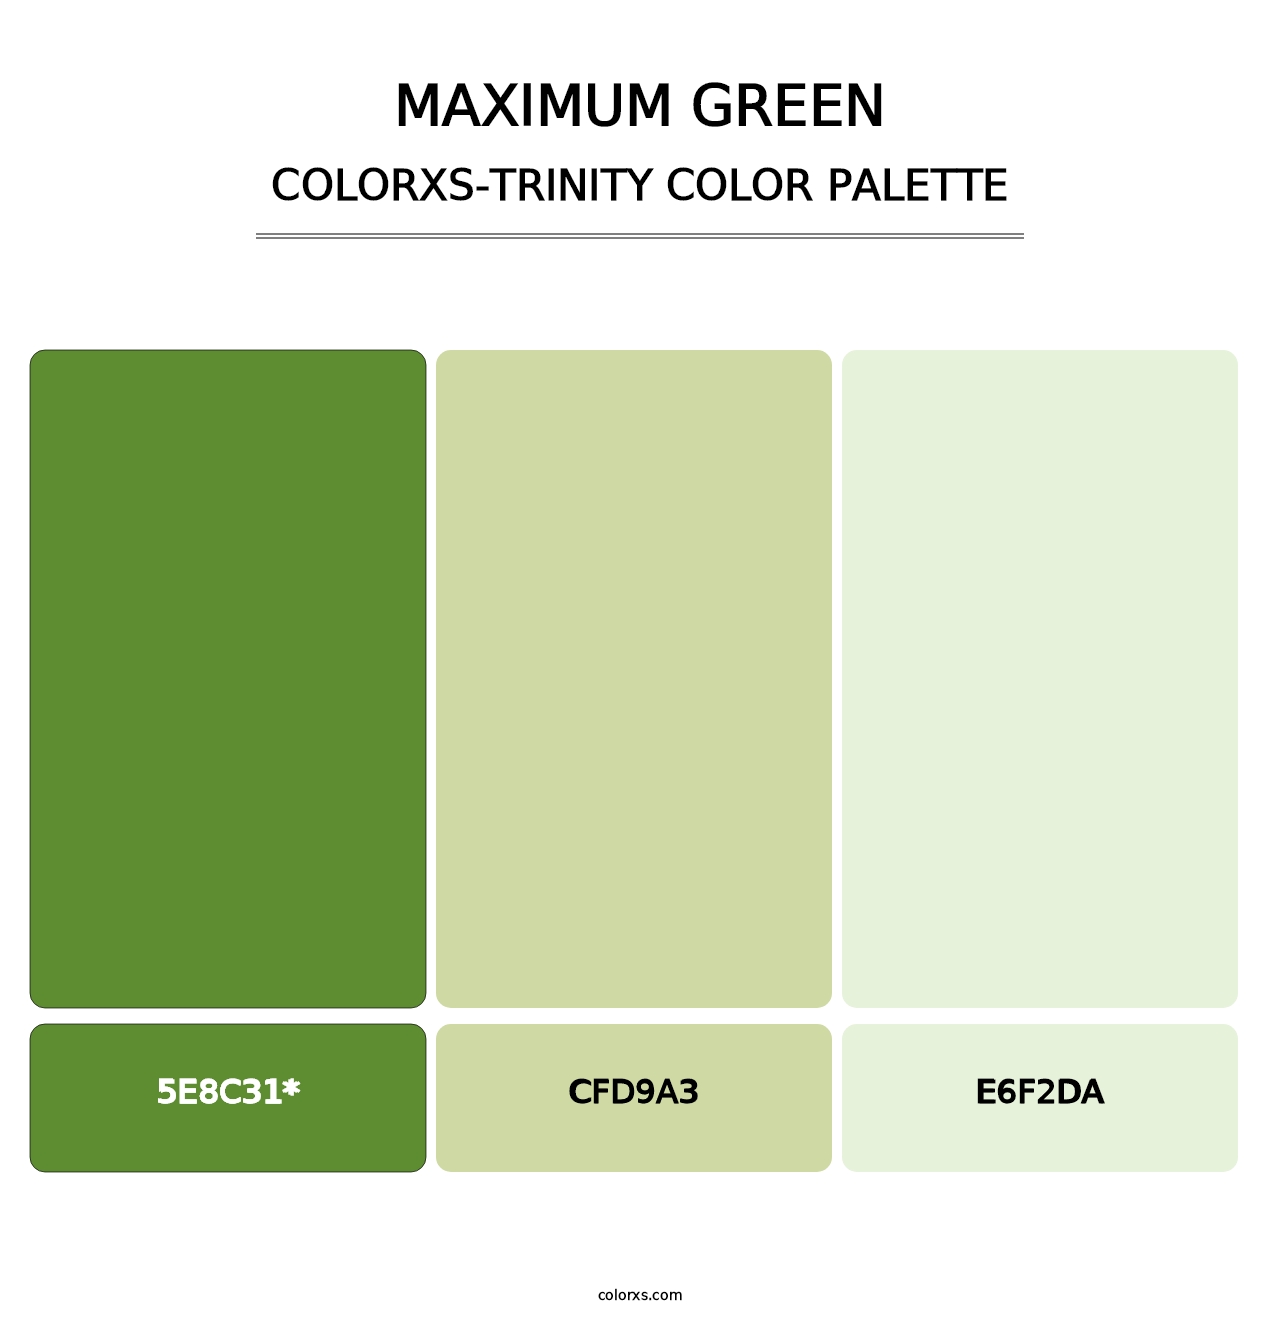 Maximum Green - Colorxs Trinity Palette